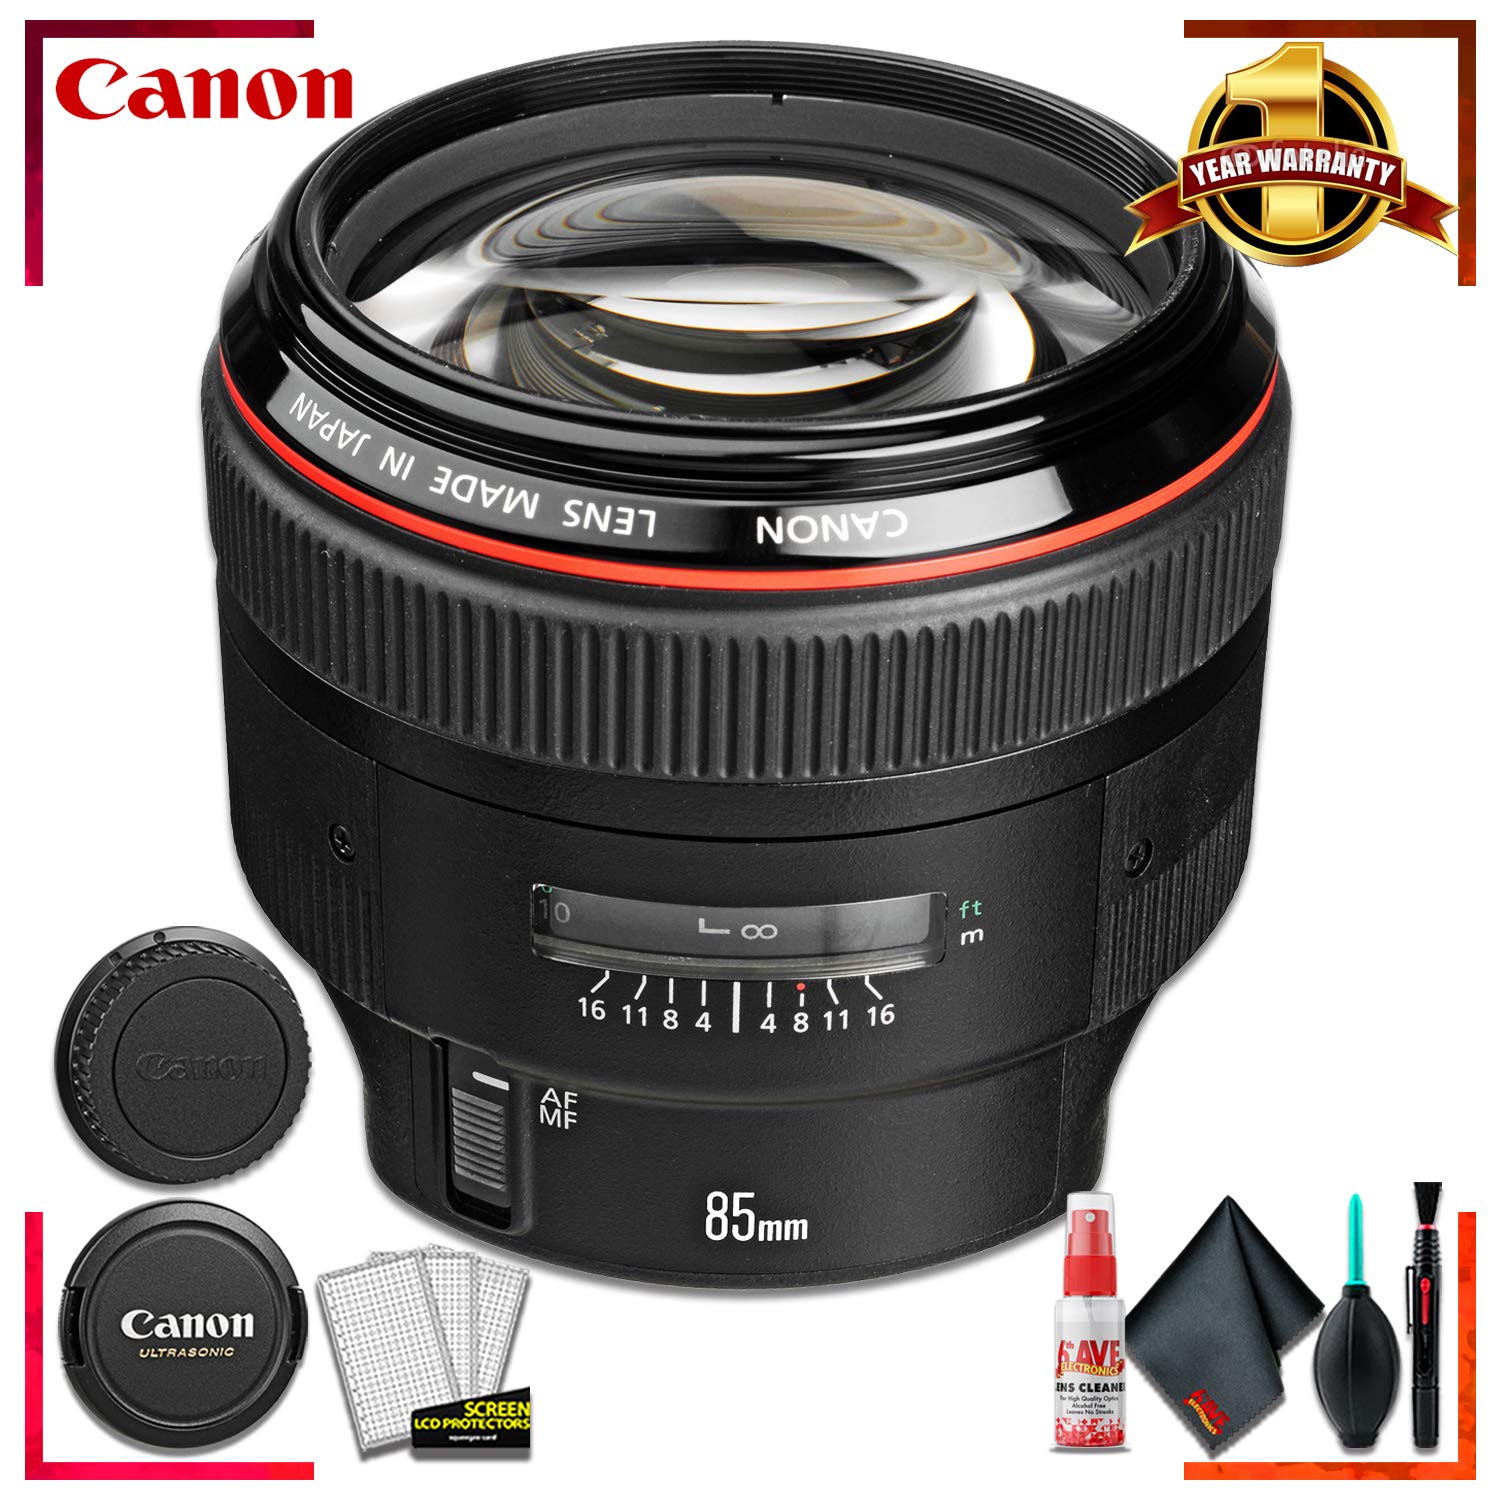 Canon EF 85MM F/1.2 L USM II Camera Lens (Intl Model) + Cleaning Kit